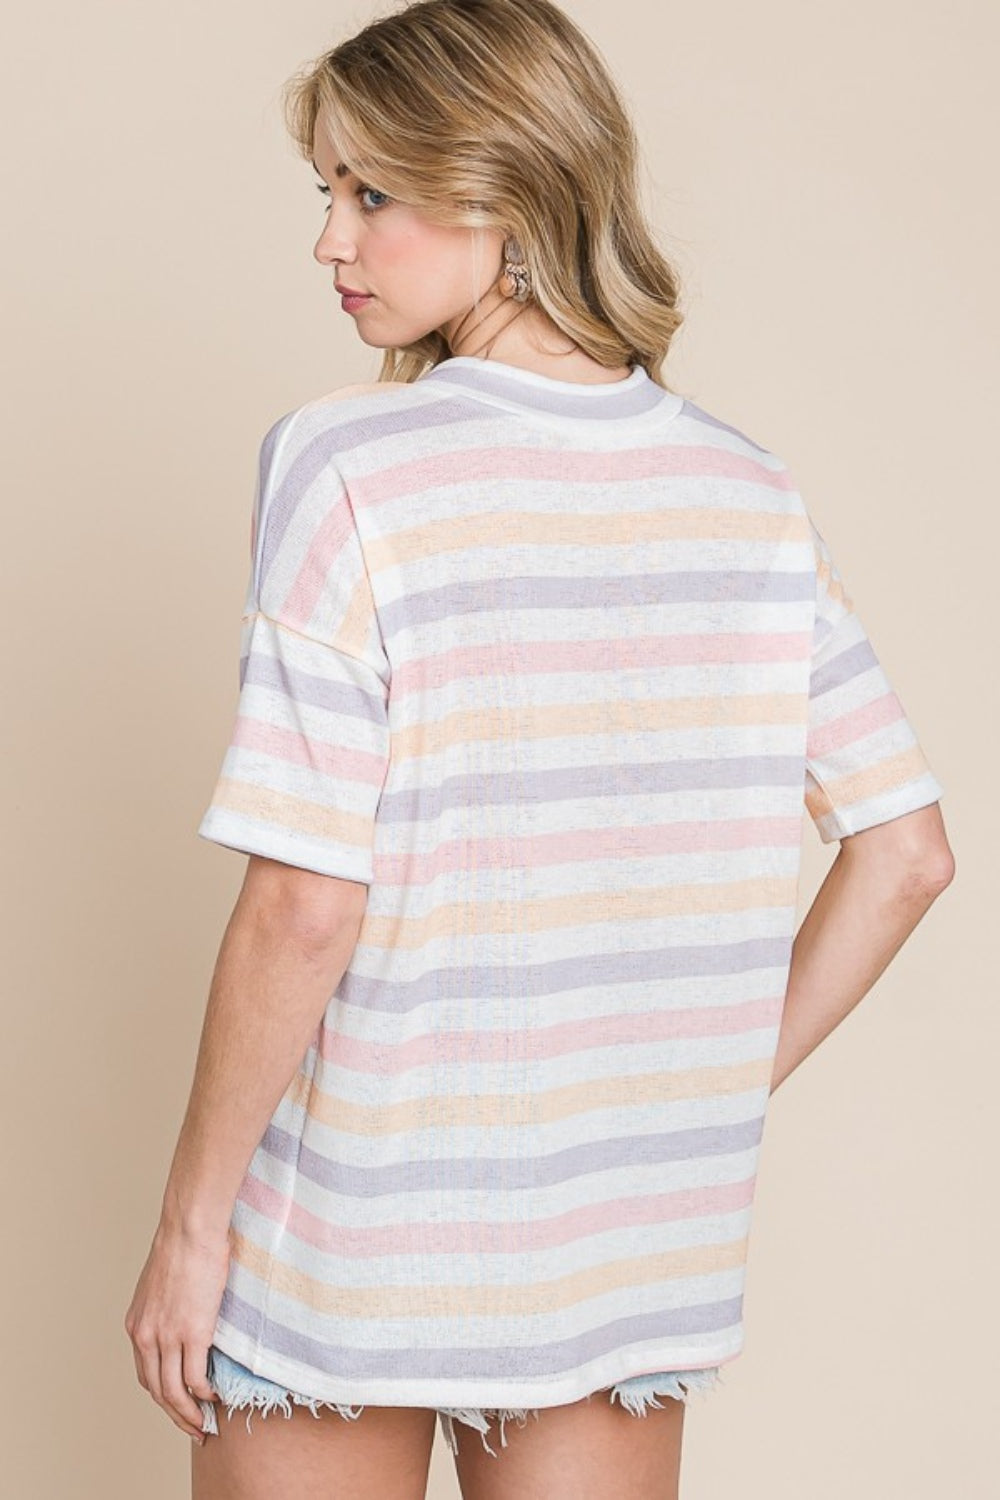 BOMBOM Striped V-Neck Short Sleeve T-Shirt Southern Soul Collectives